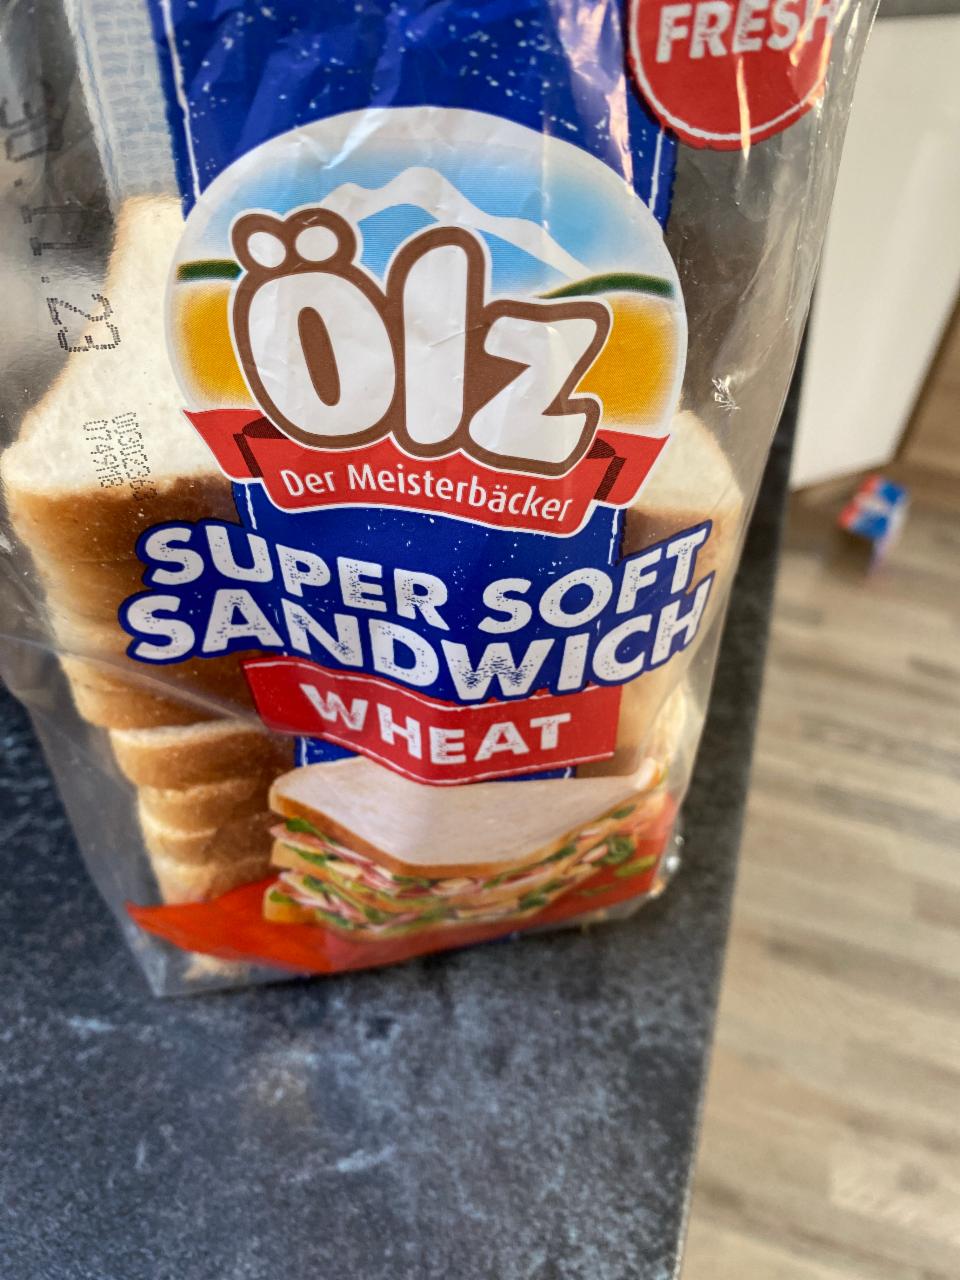 Фото - Super soft sandwich wheat Ölz Der Meisterbäcker